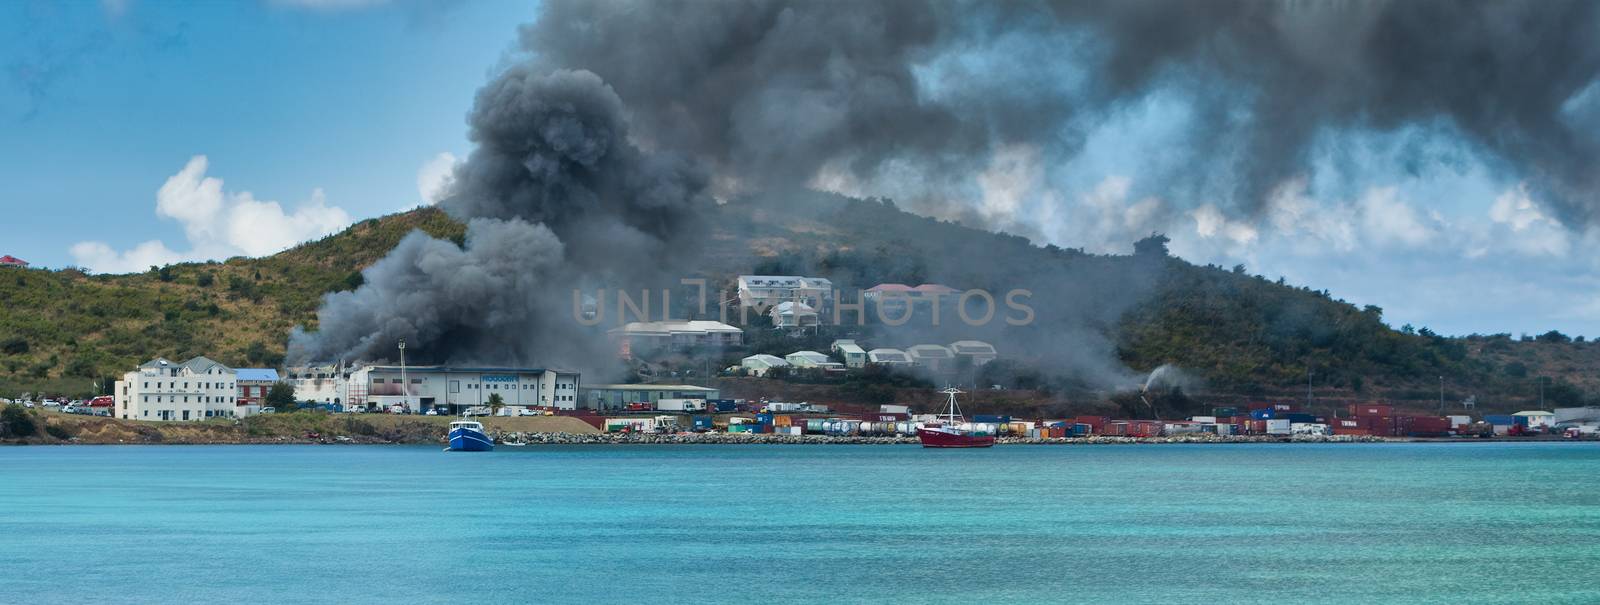 Fire in Marigot Factory by dbvirago